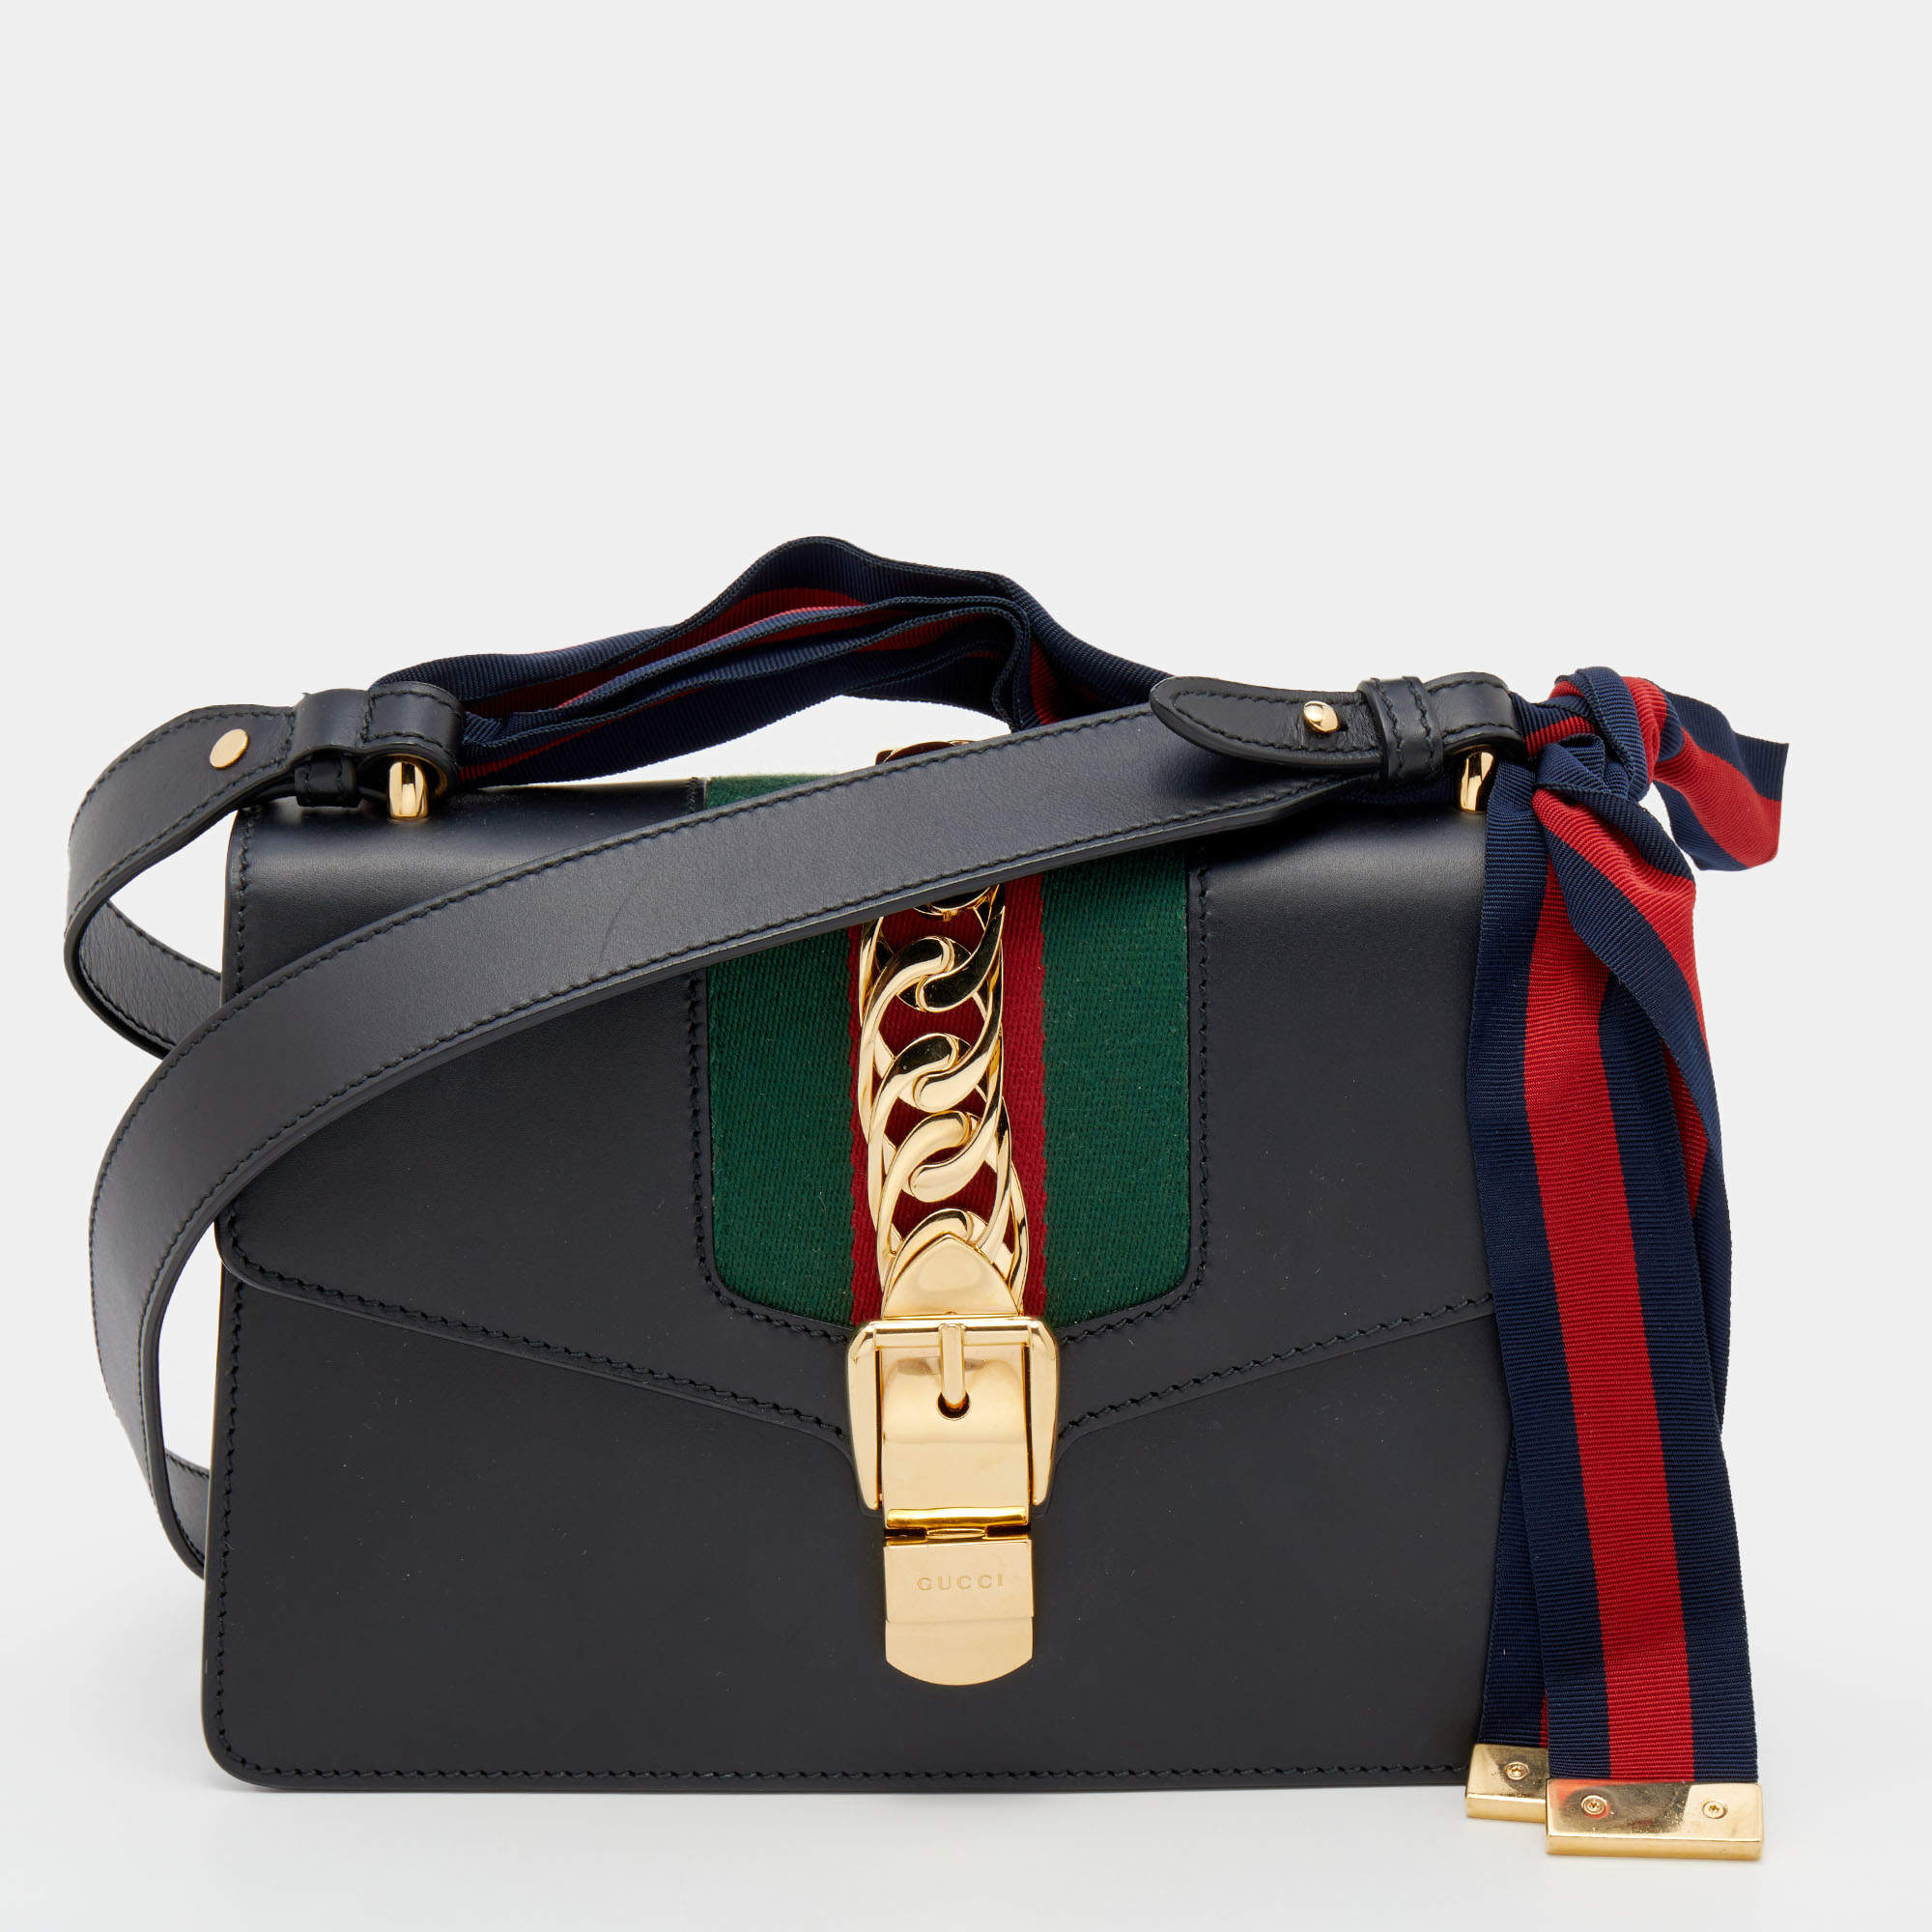 Gucci Black Leather Medium Sylvie Shoulder Bag